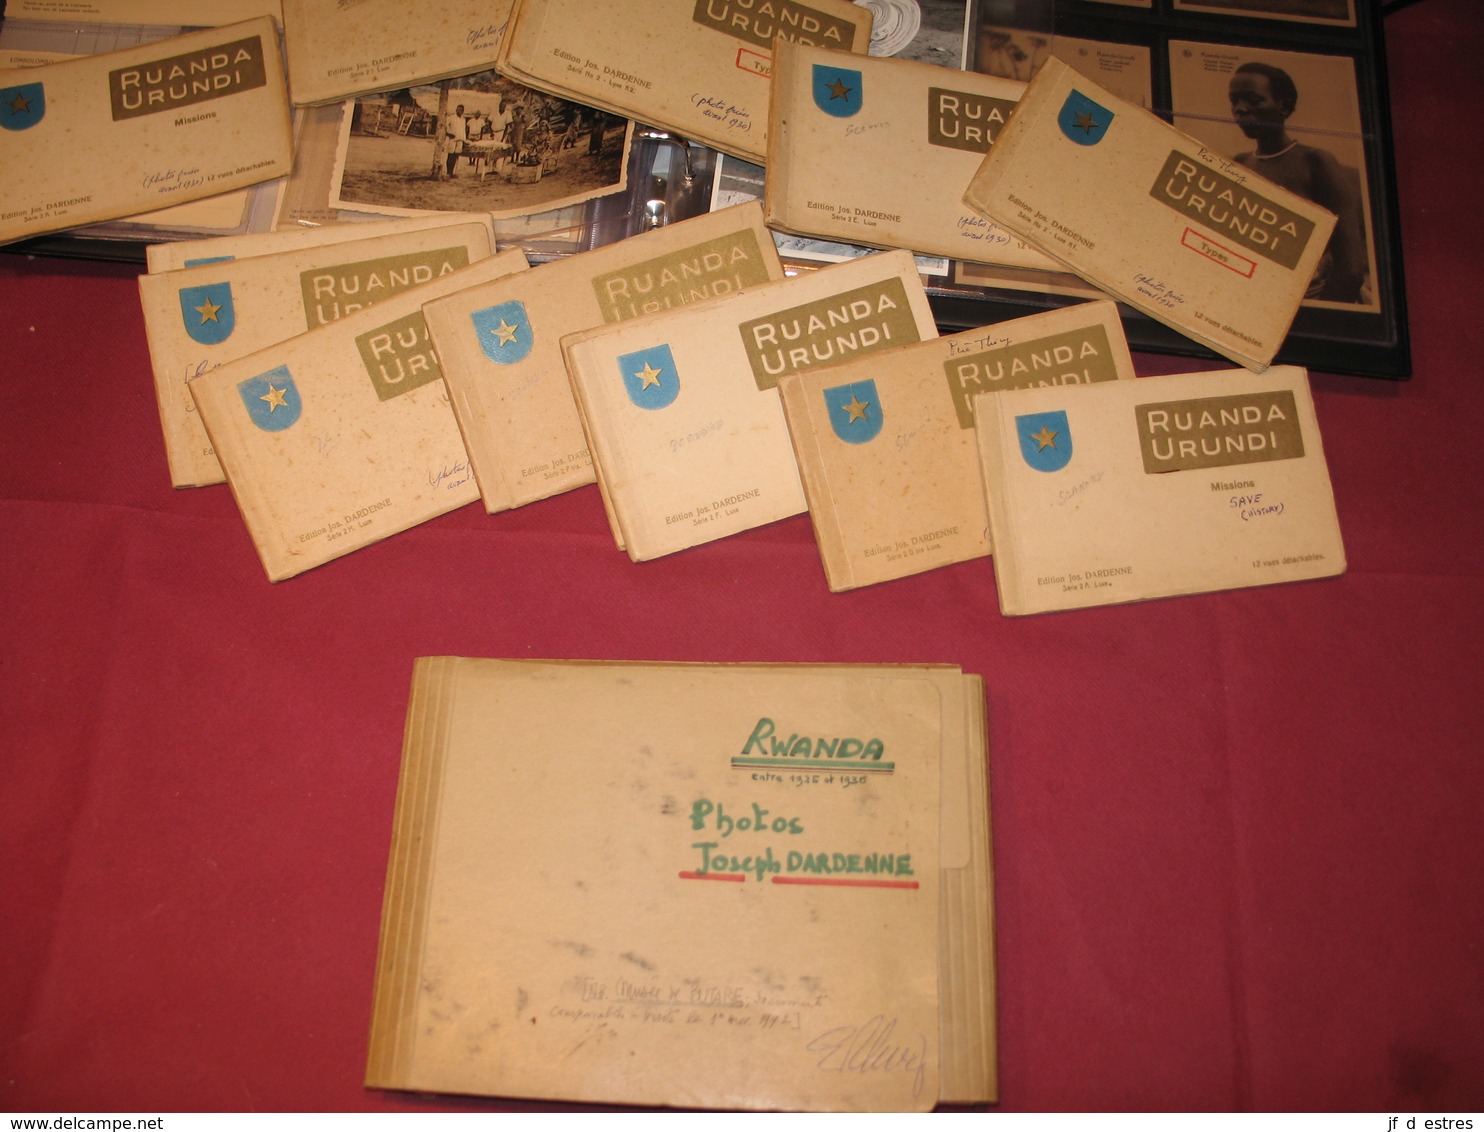 10 CP Ruanda Urundi "Caravane" Ed. Jos Dardenne 1 carnet série 2 E. Vers 1930 Ethnographie Rwanda Burundi